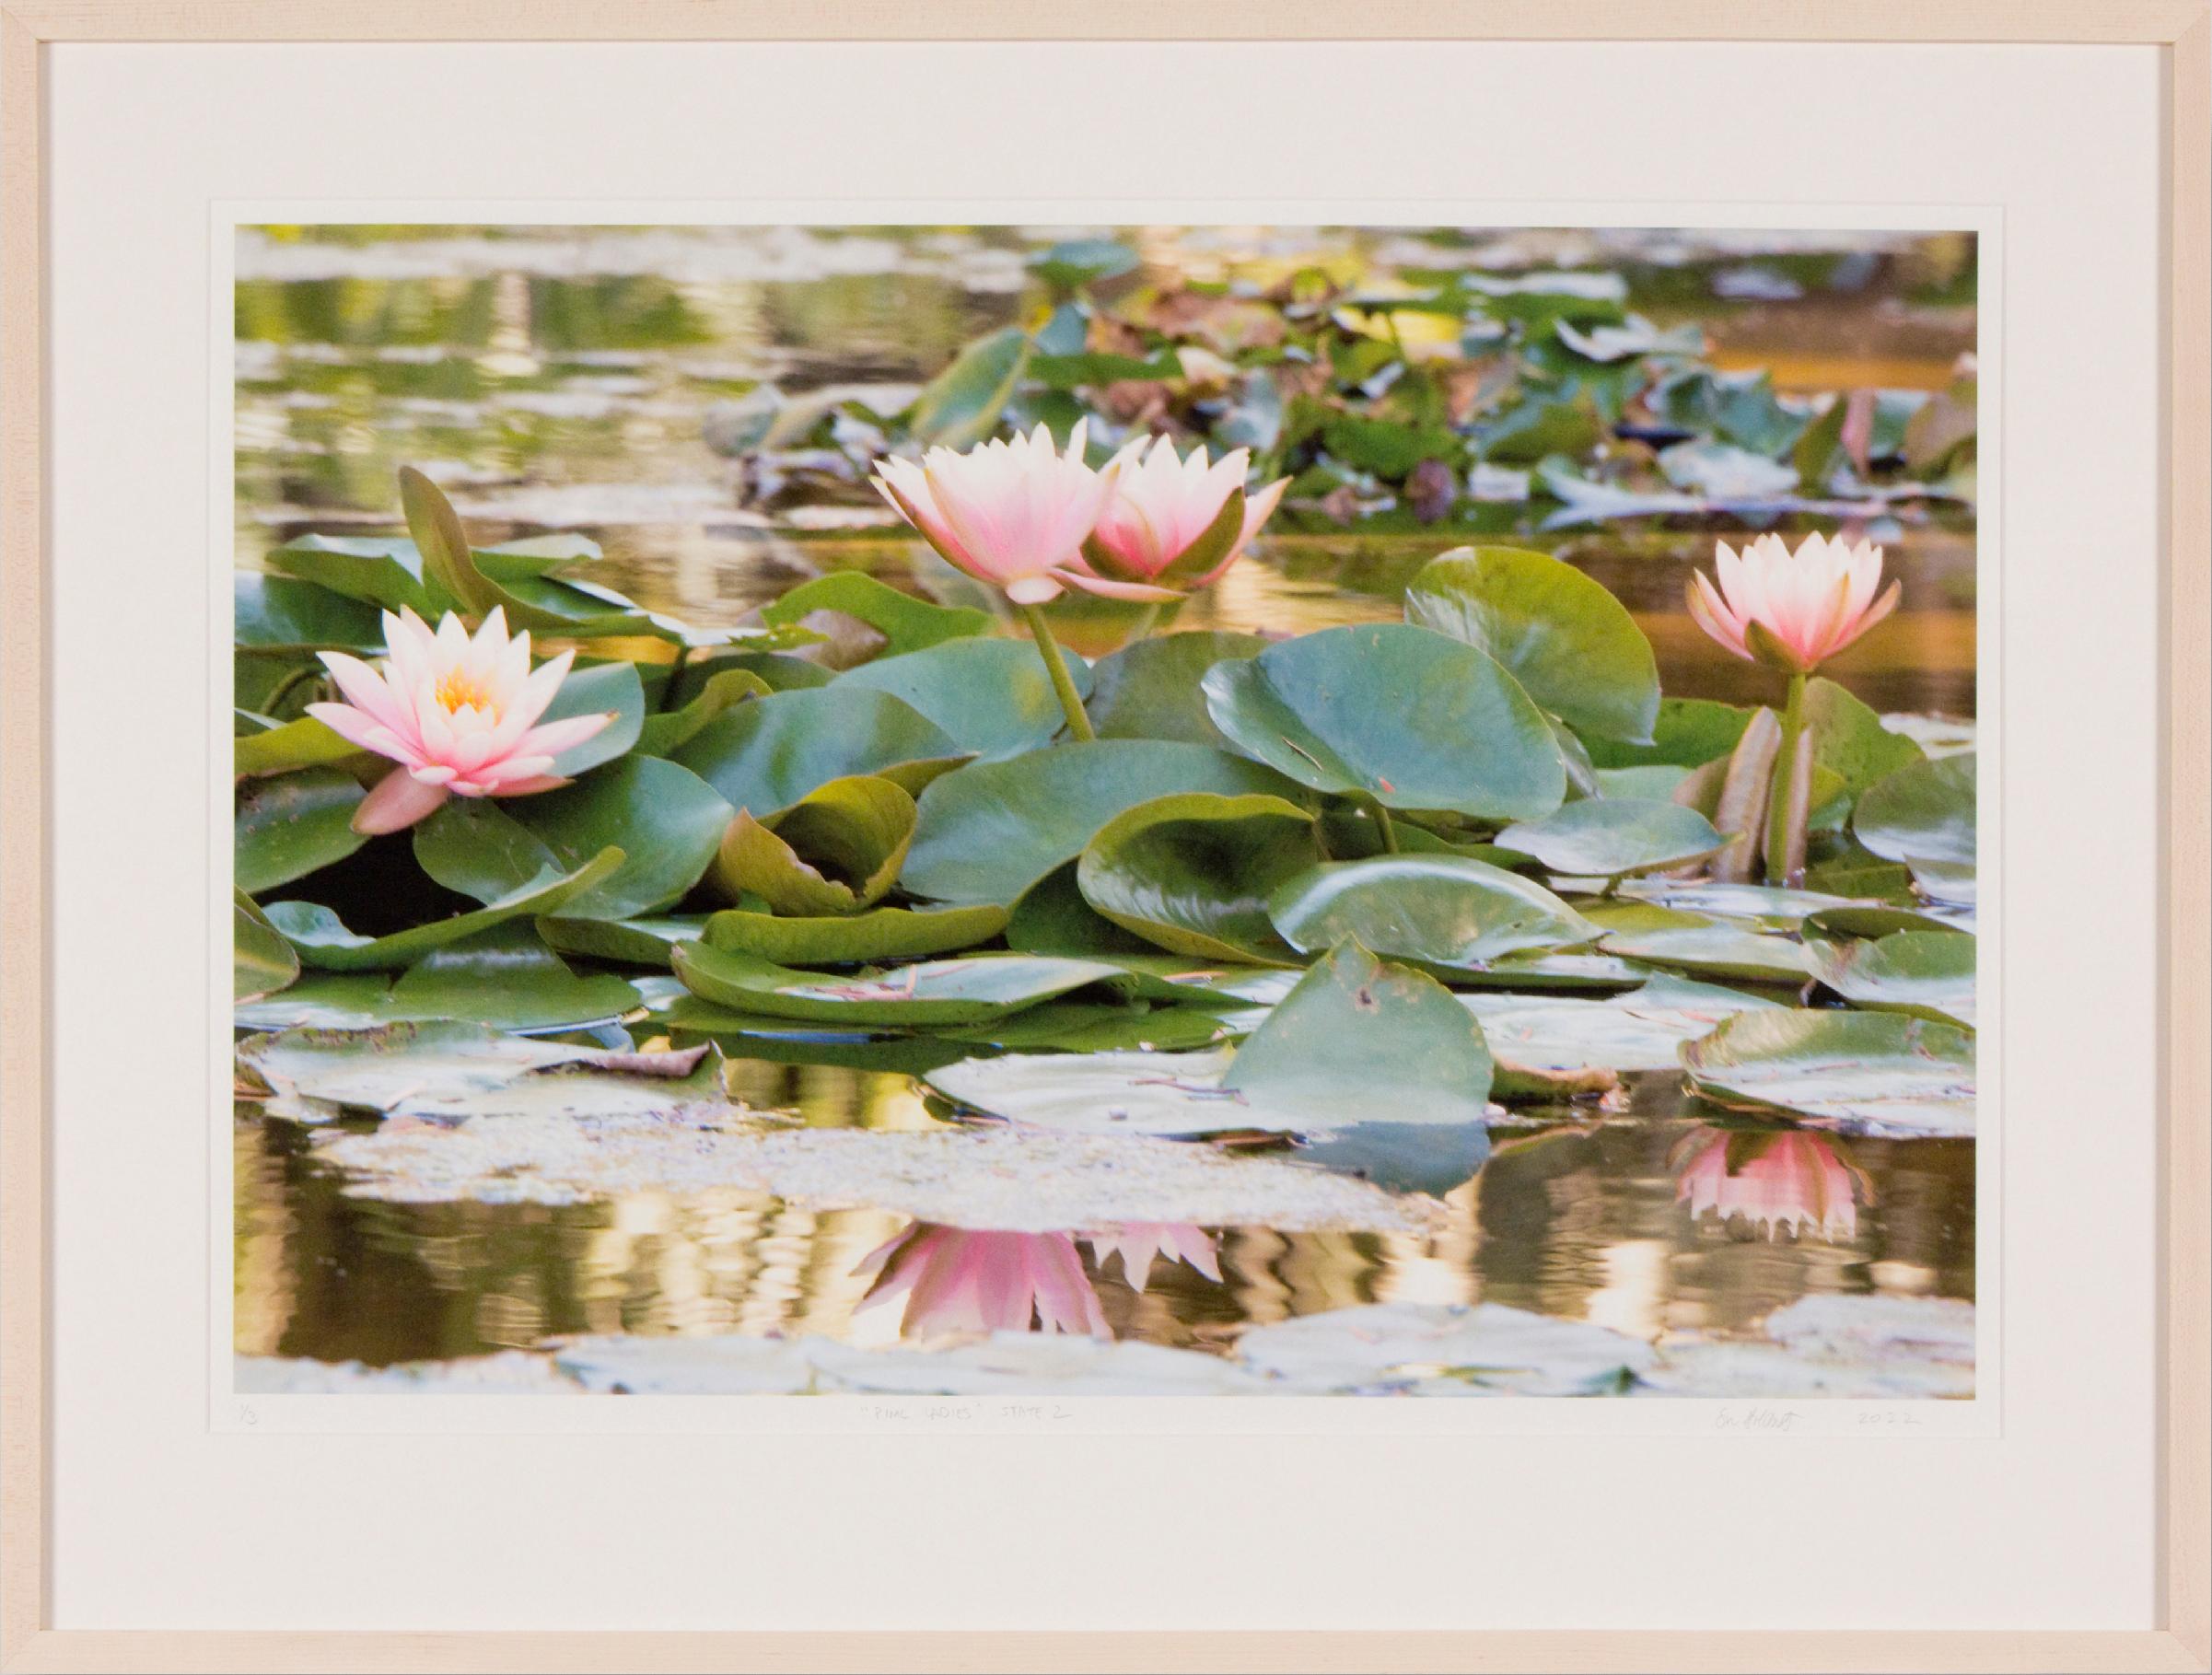 PINK LADIES STATE 2 - Floral Art Photography / Water Lily / Botanic Garden